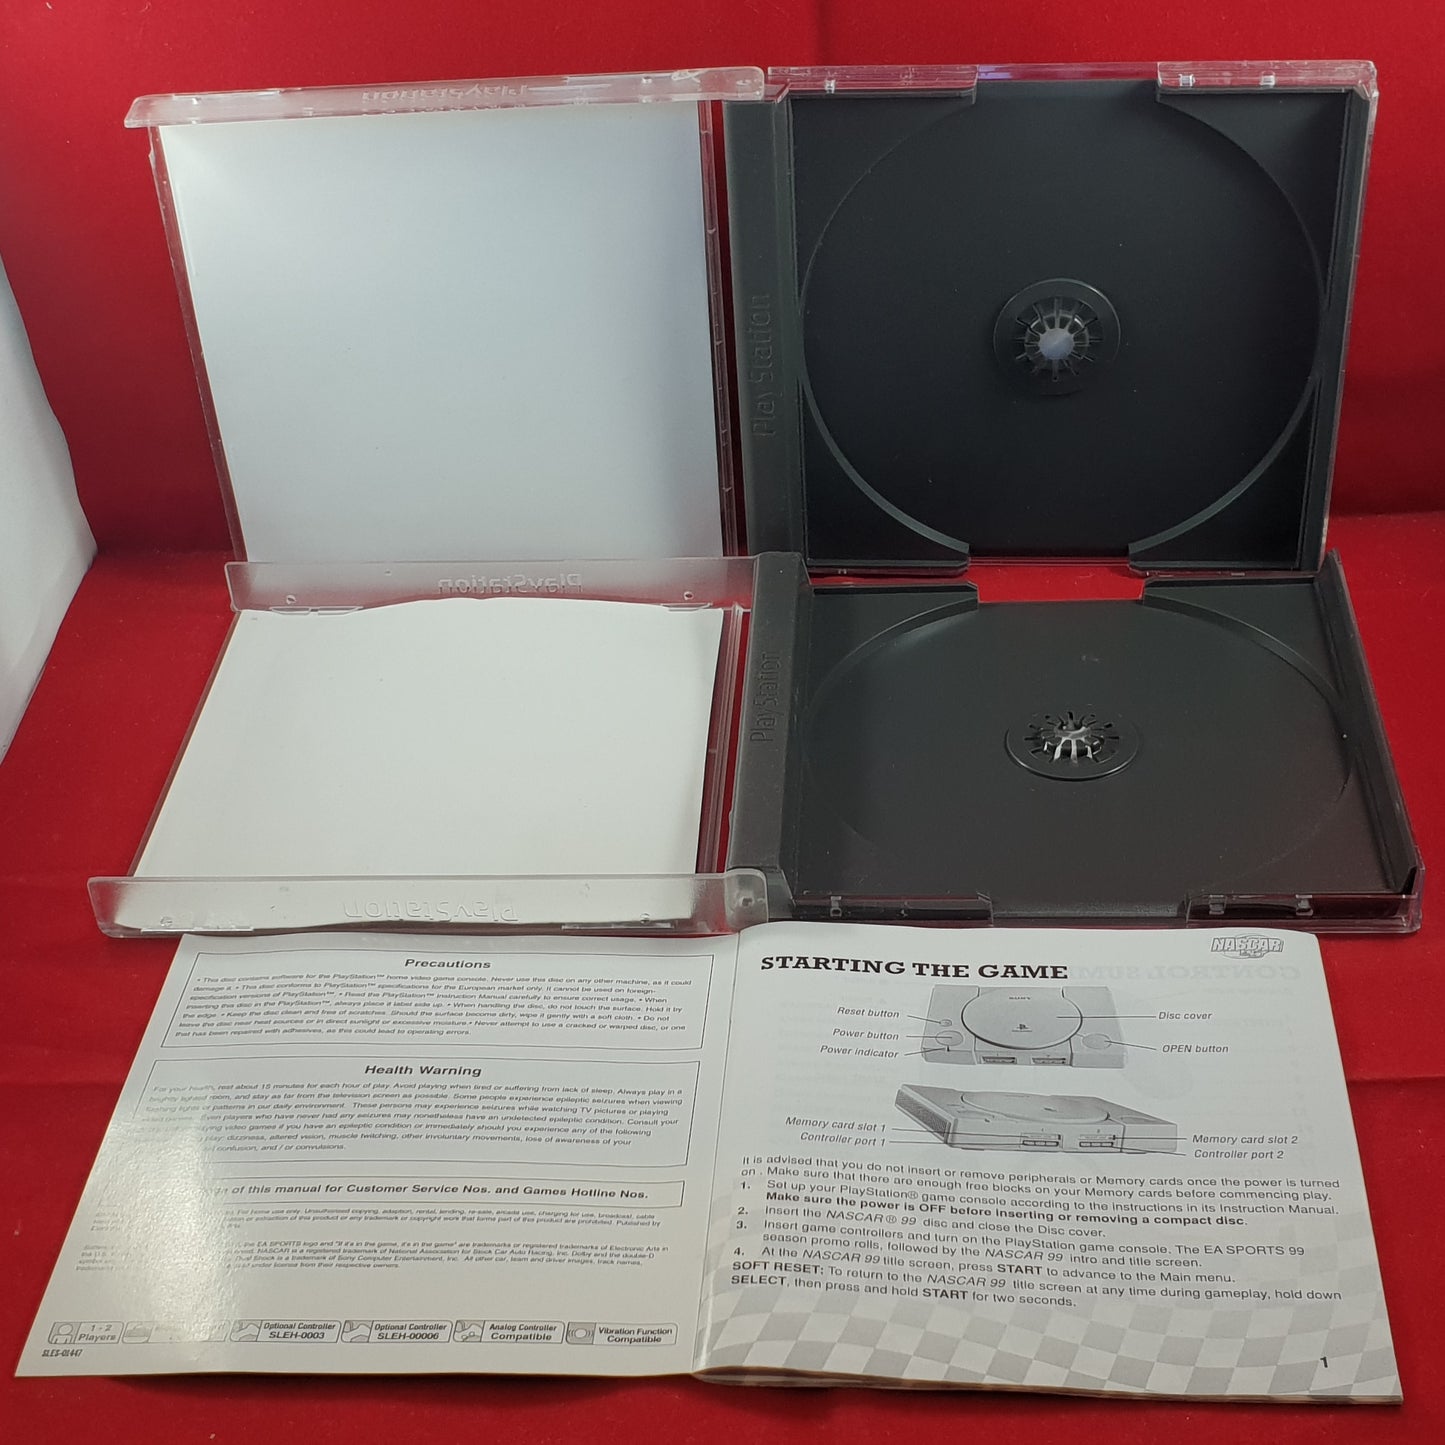 Nascar 99 & 2000 Sony Playstation 1 (PS1) Game Bundle